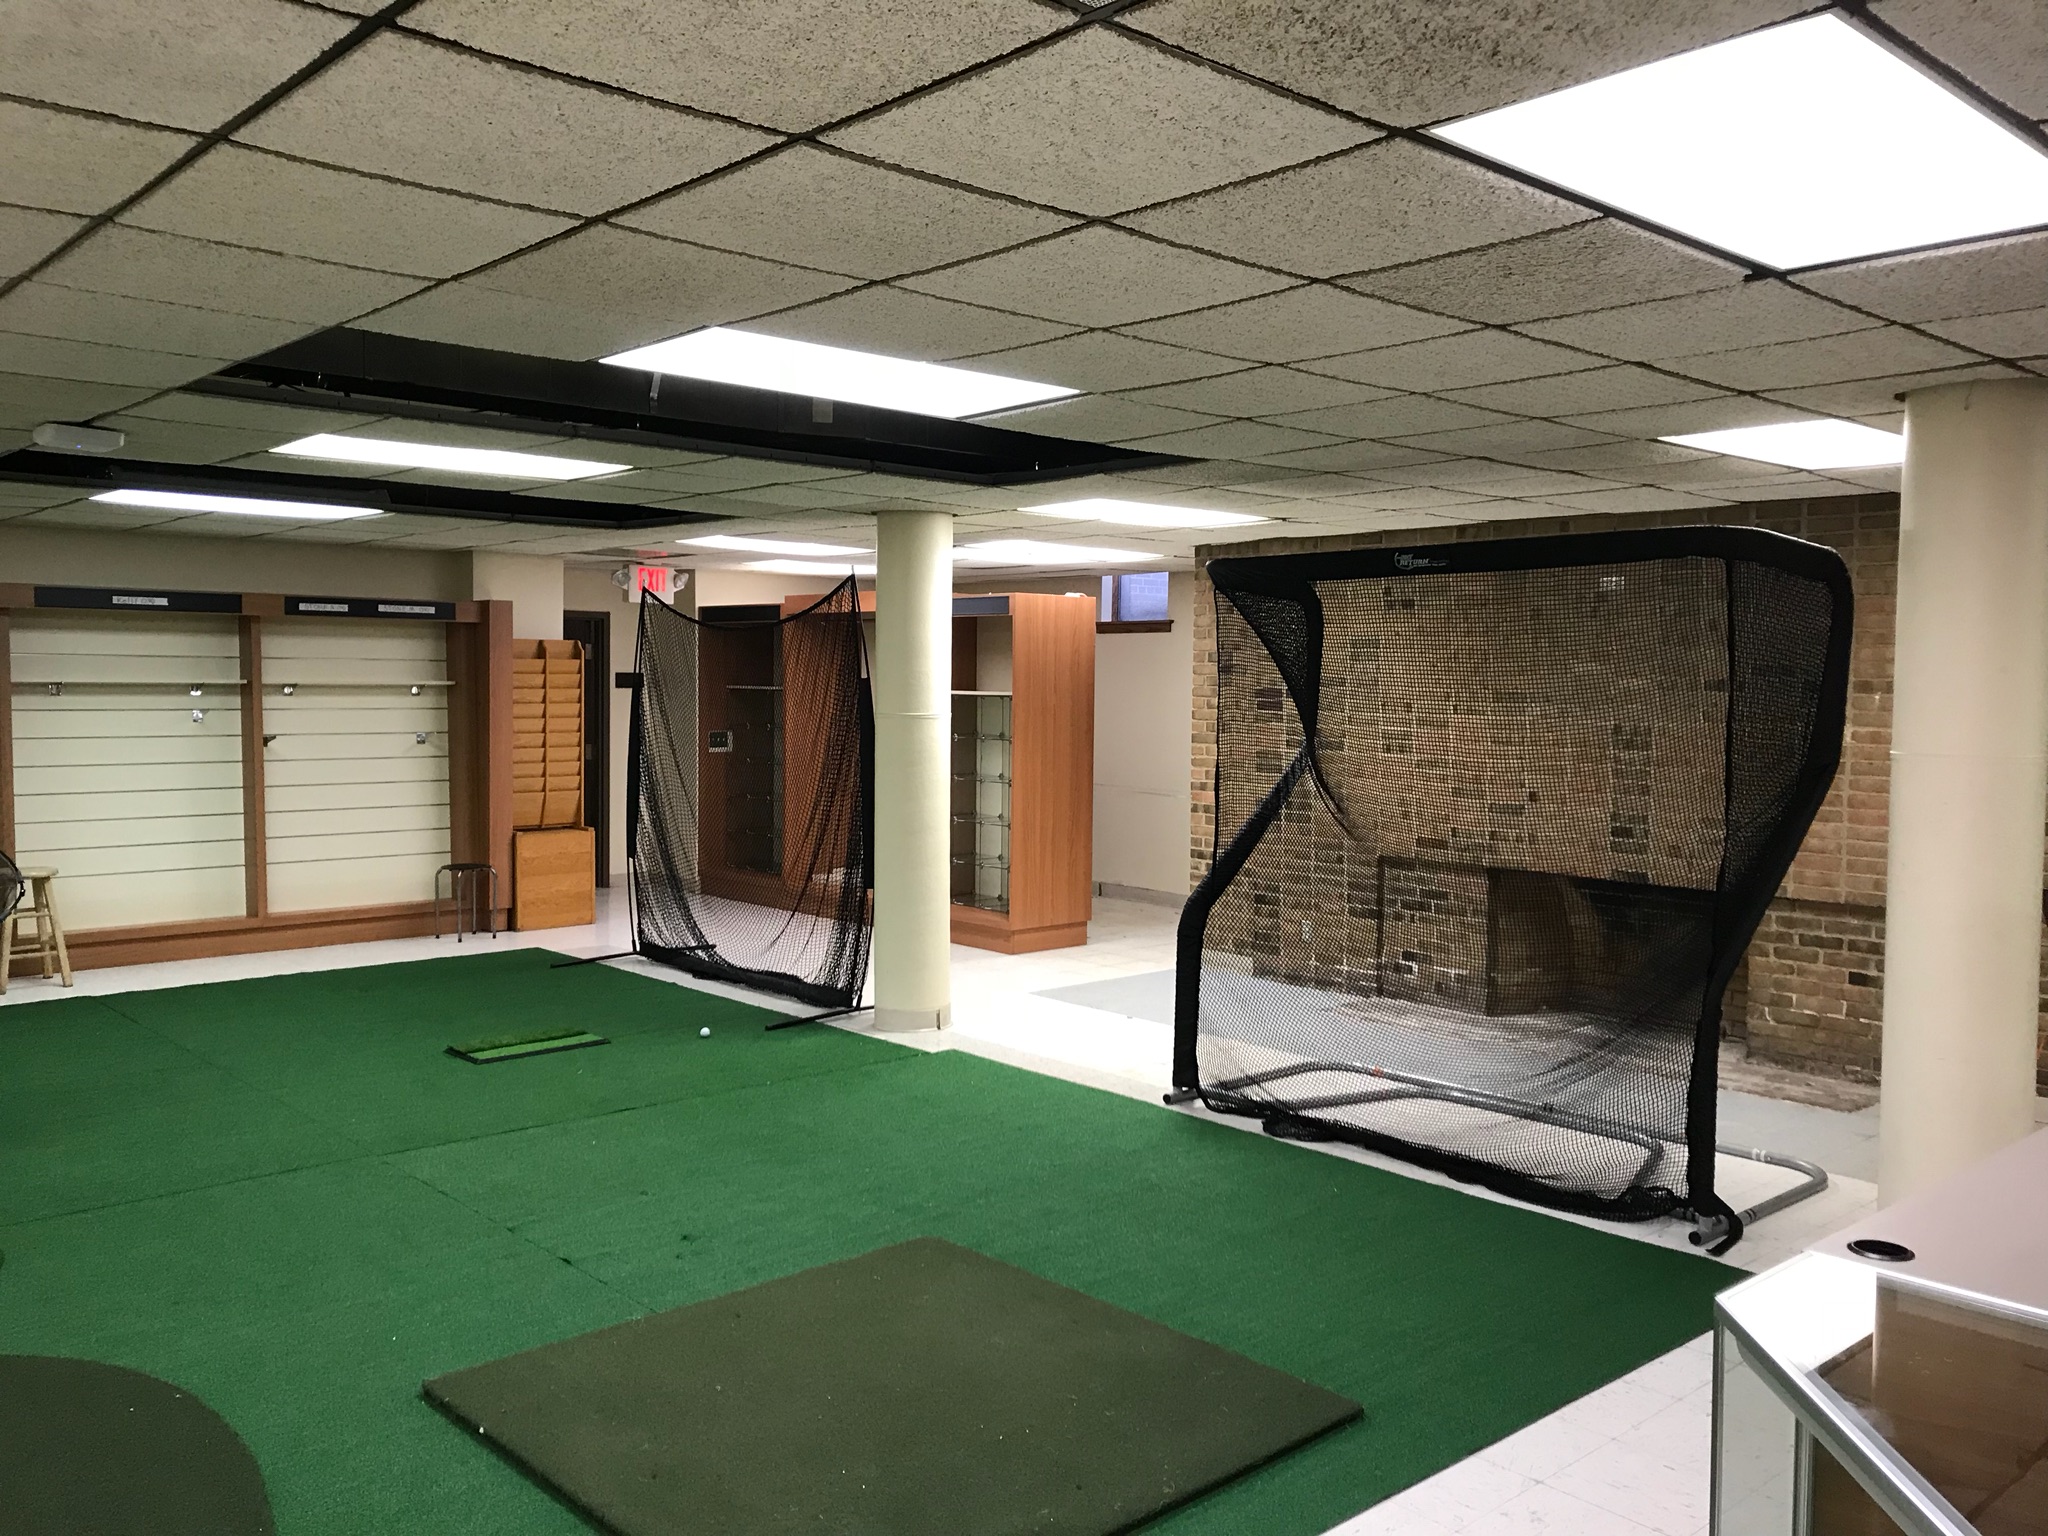 Crusader golf introduces new indoor practice area